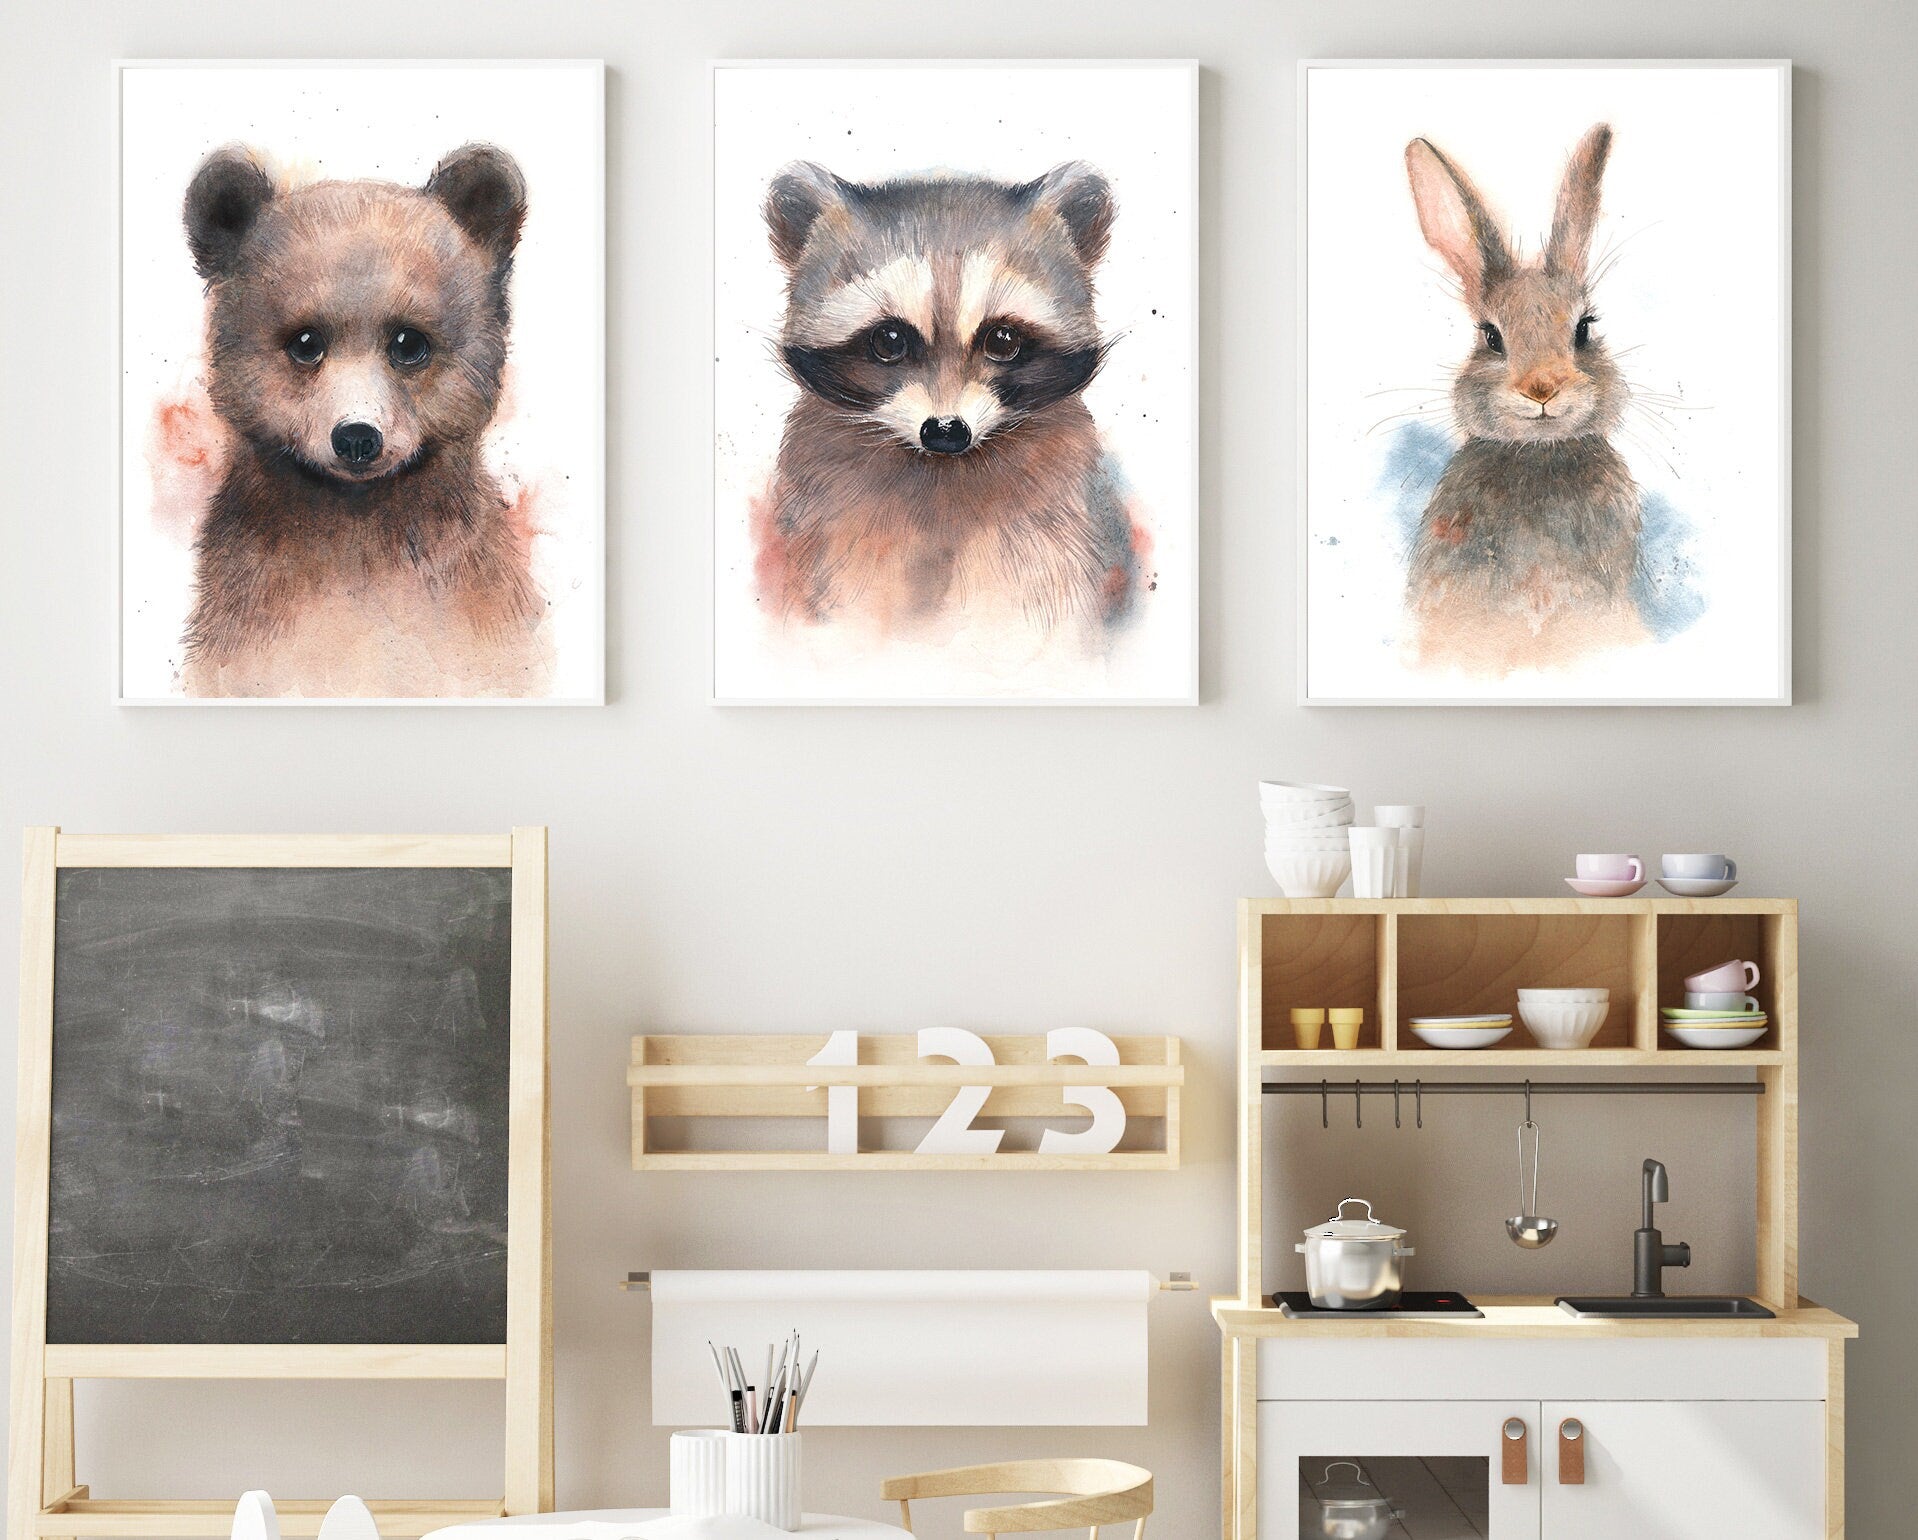 Baby Bunny Print, Rabbit Nursery Art, Nursery Animal Print, Cute Bunny Wall Decor, Nursery Wall Decor, Kids Bedroom Wall Art Boys Room Decor